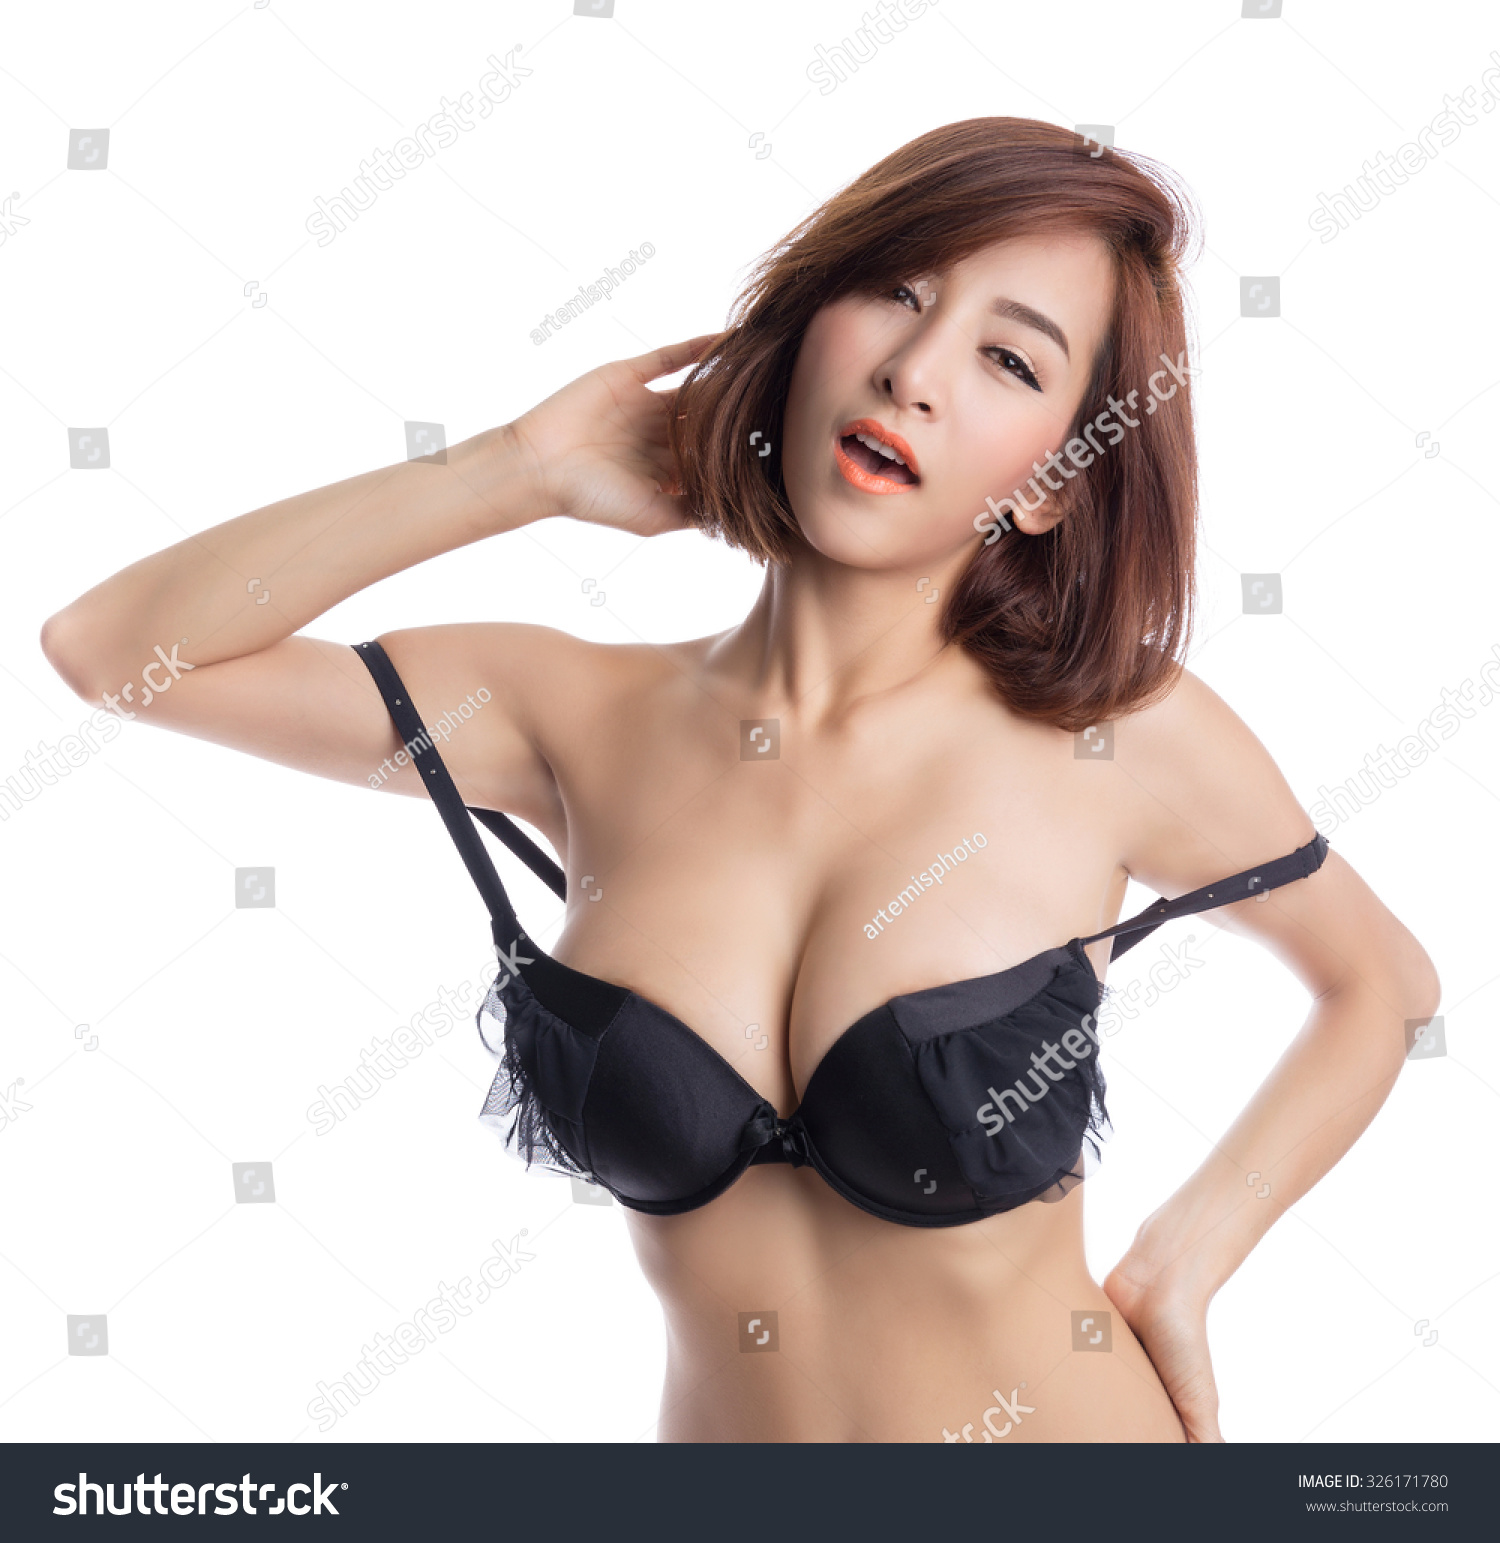 brenda fassie add big titty asian women photo